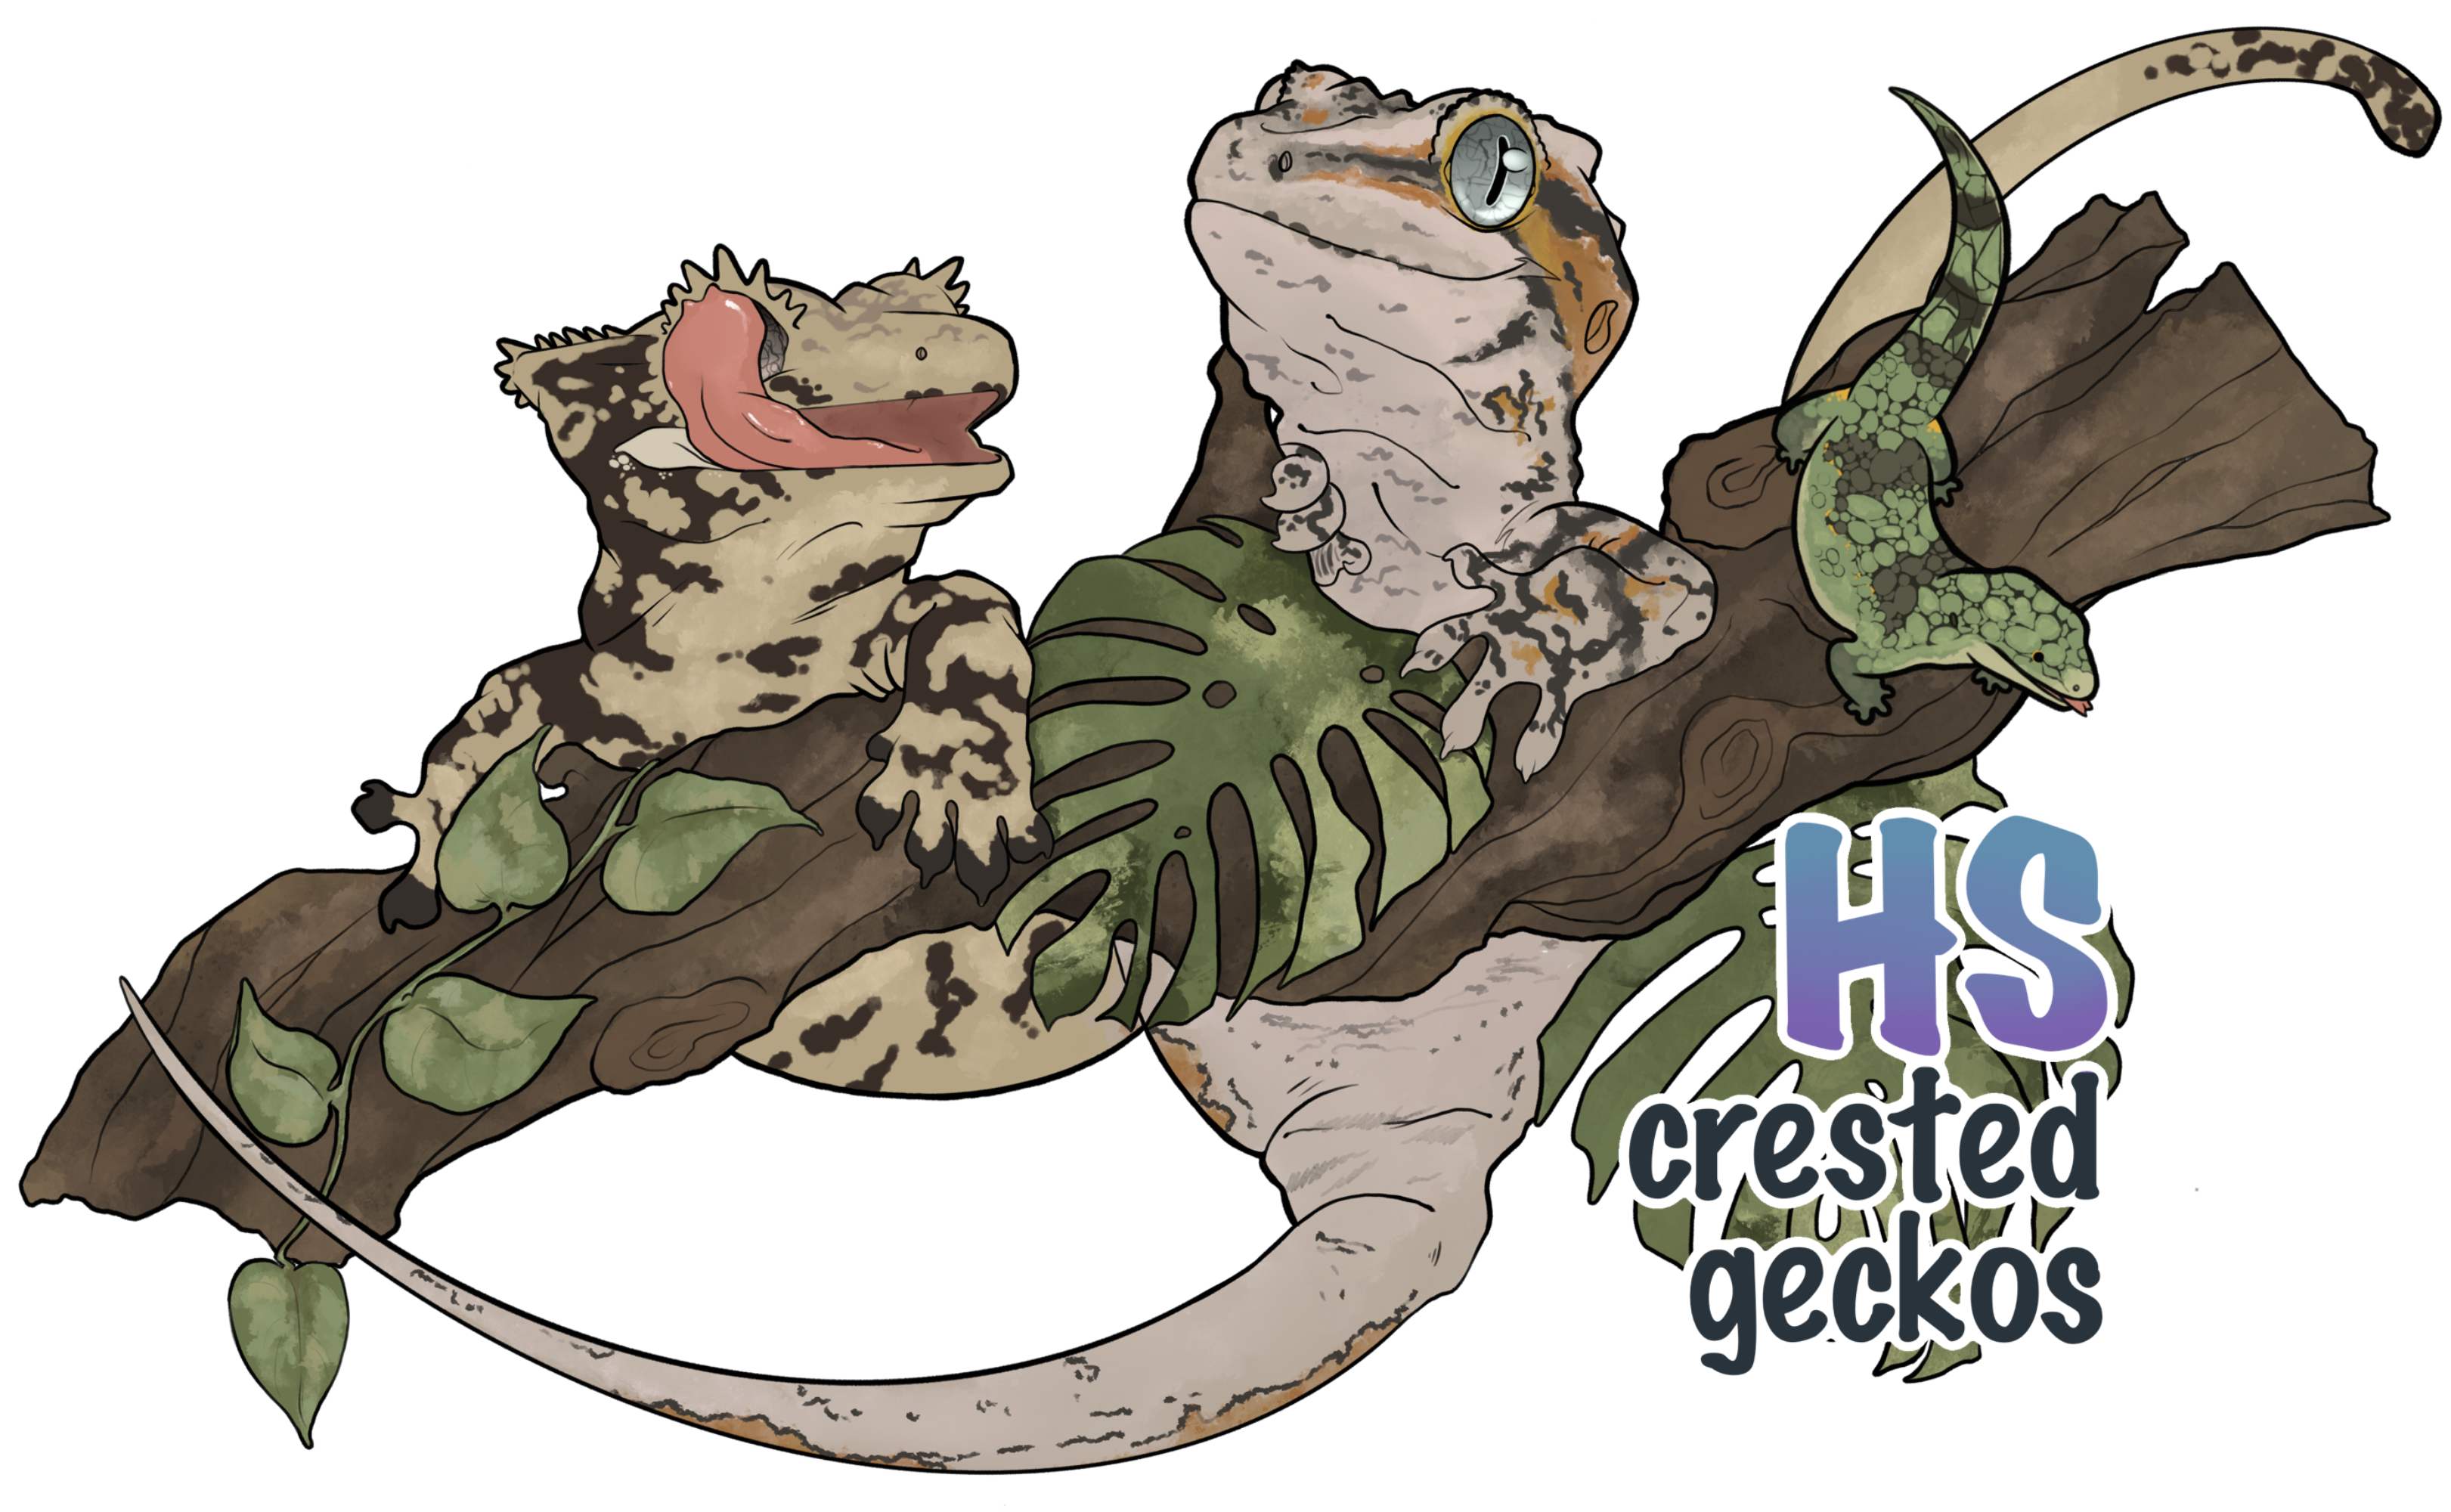 HS Crested Geckos